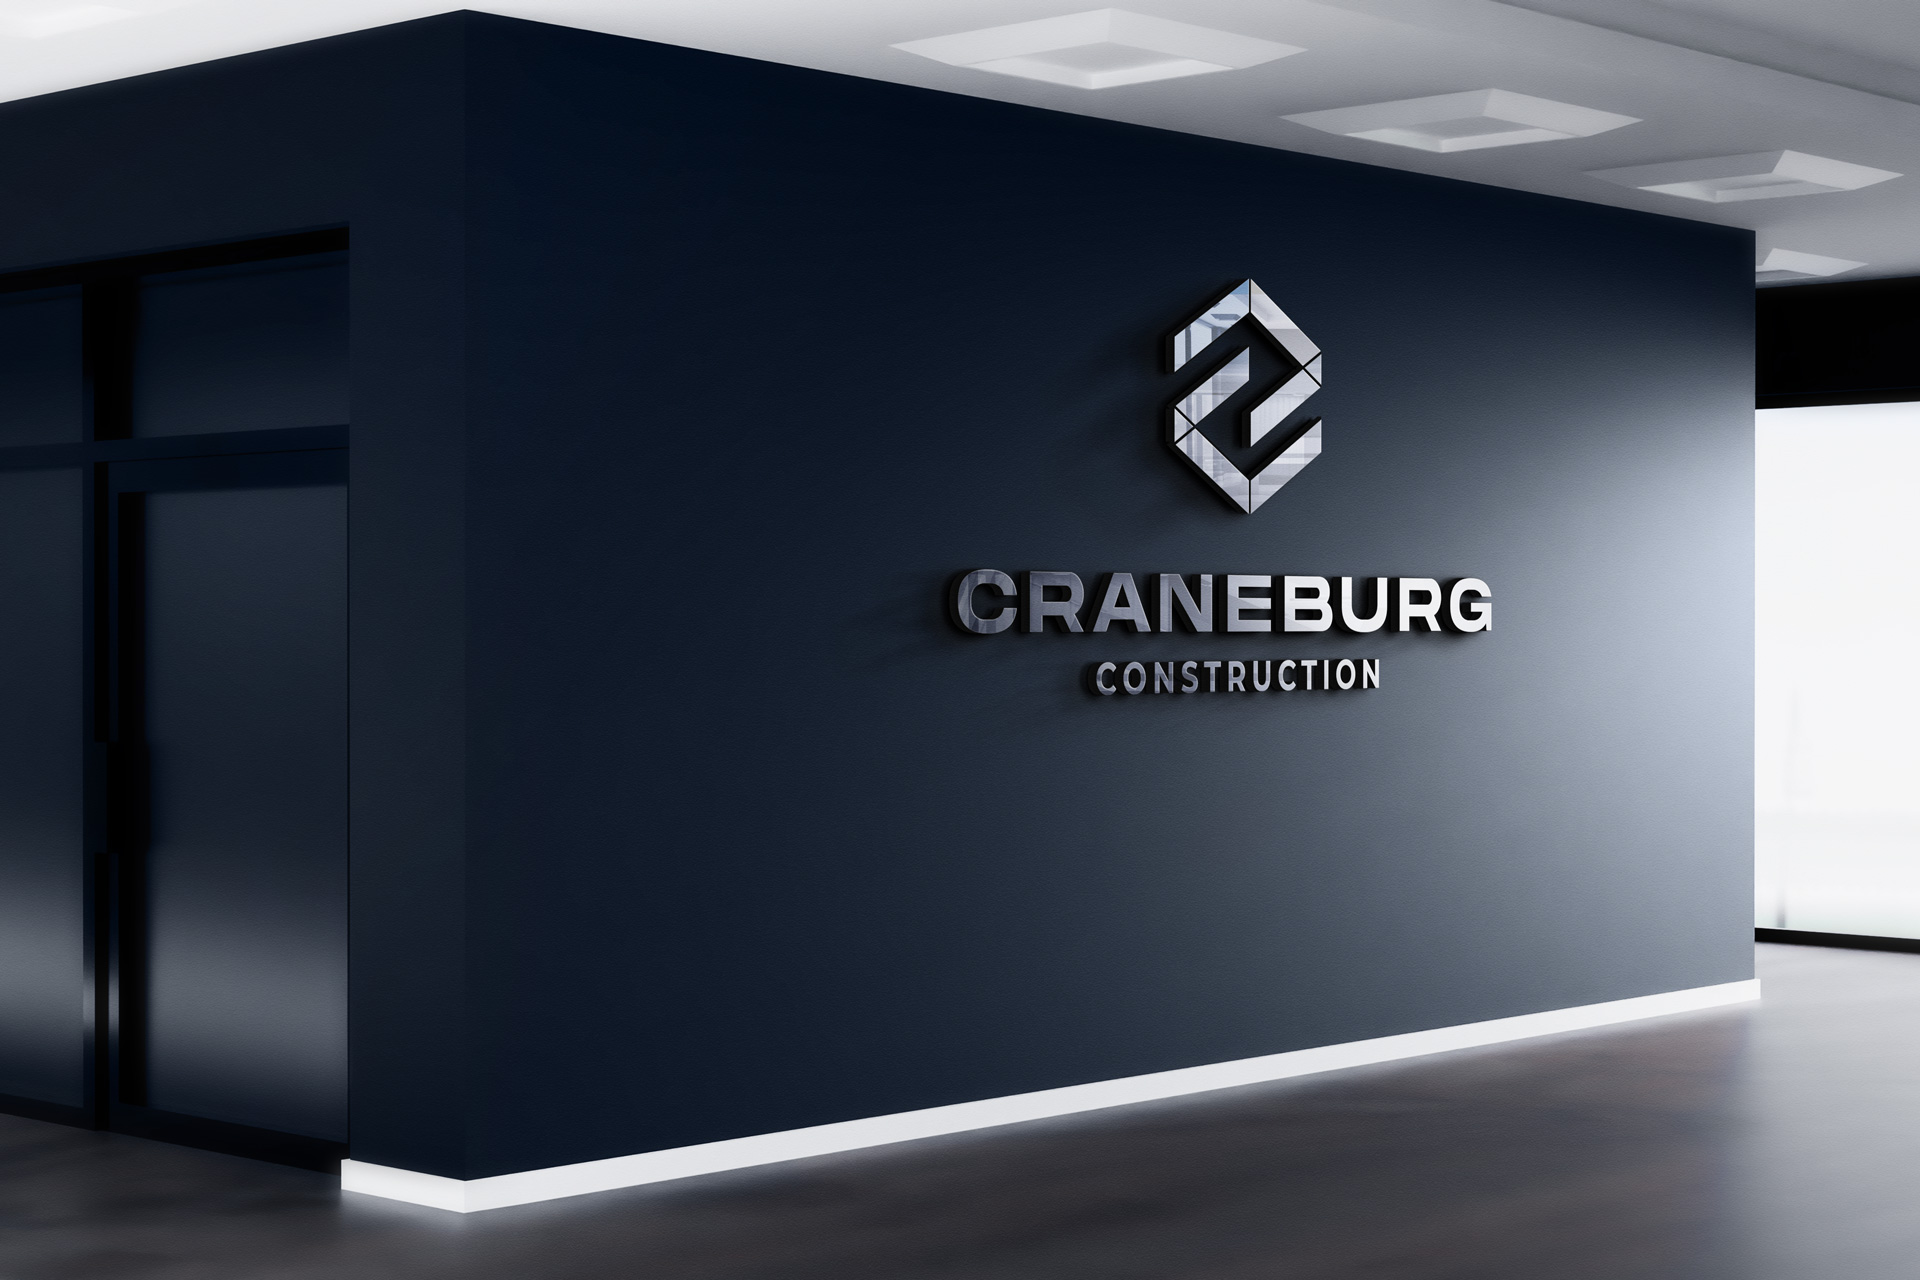 Craneburg Construction